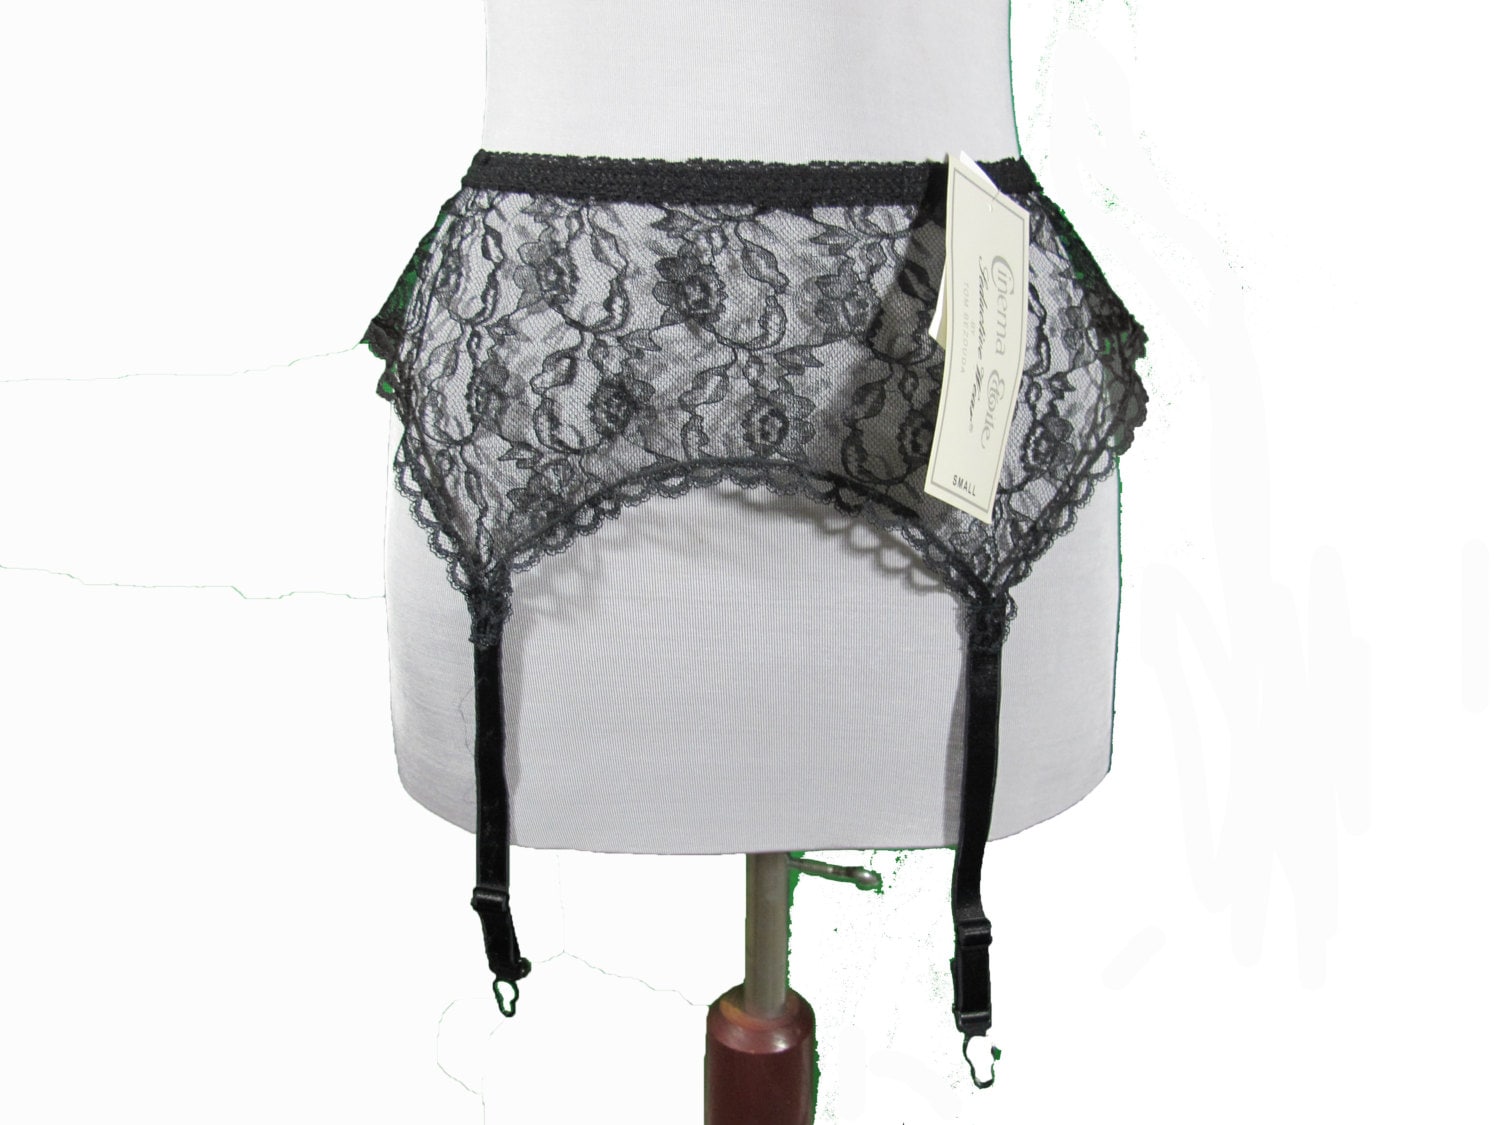 Delicate black lace Garter Belt unworn with tags by BoudoirBarbie